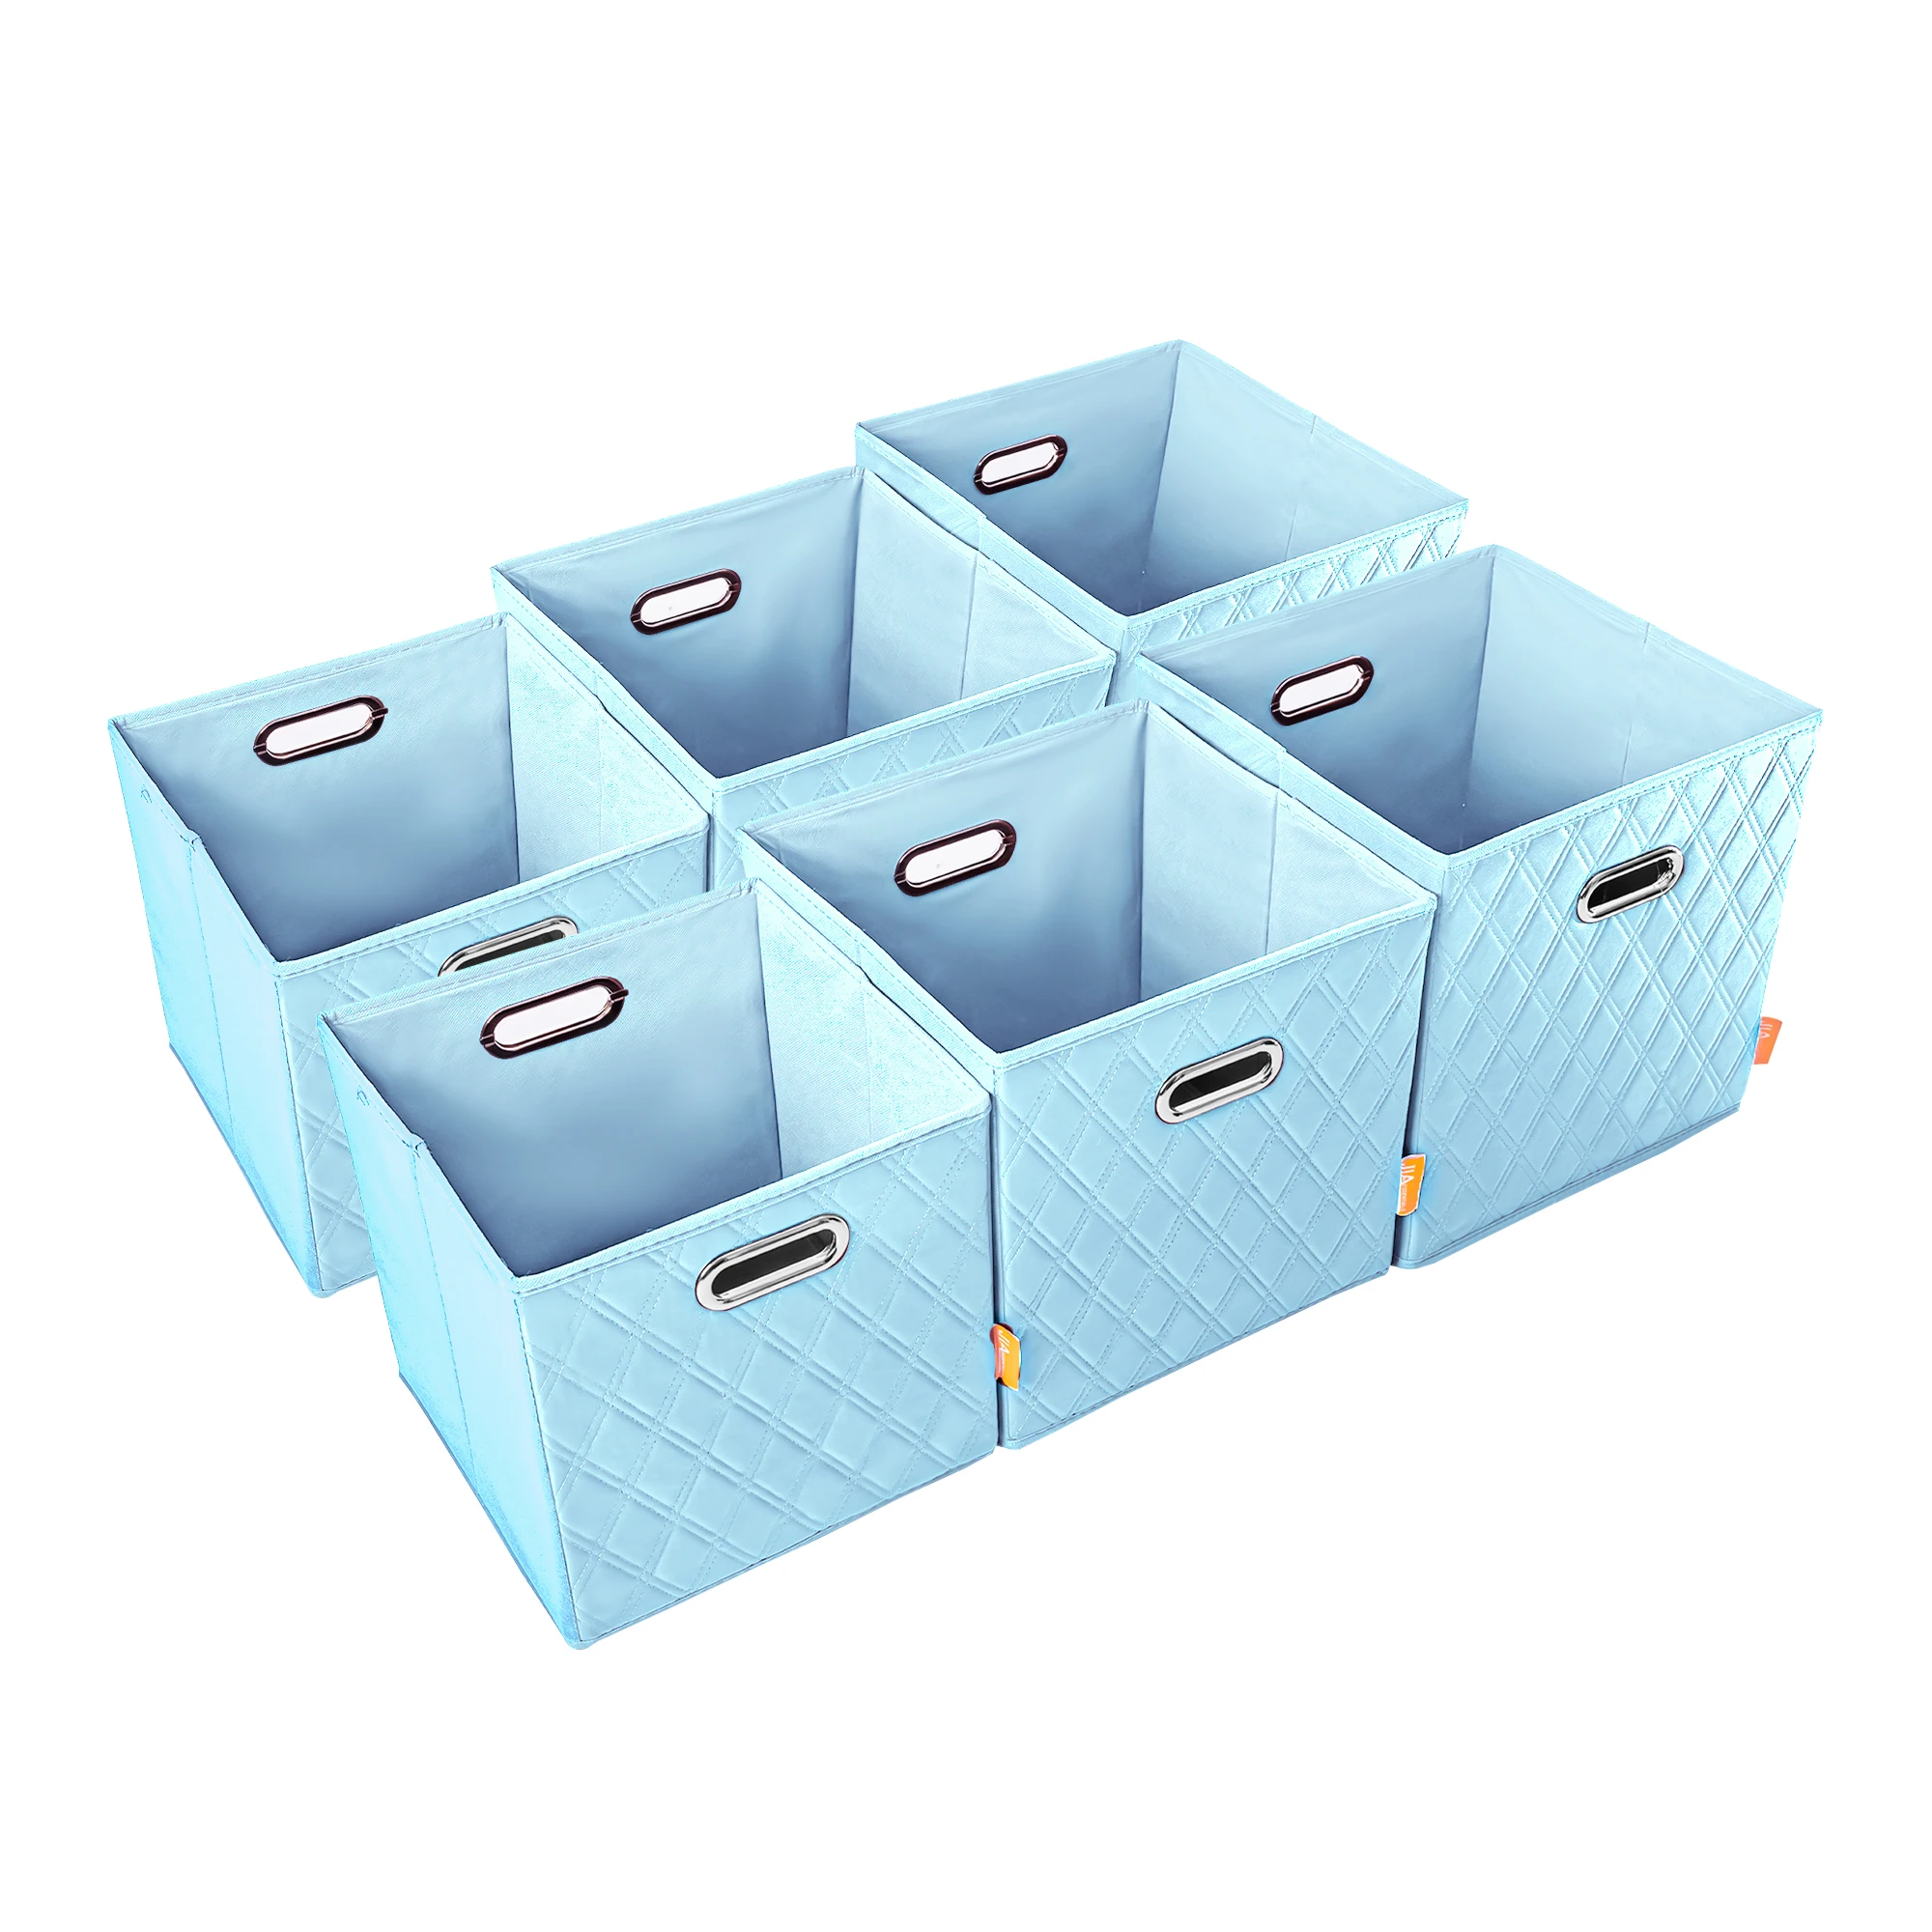 AFJE1001BLUE-3SZ Jiaessentials Blue Closet Organizers Cube Bins 3 Size 6pcs.